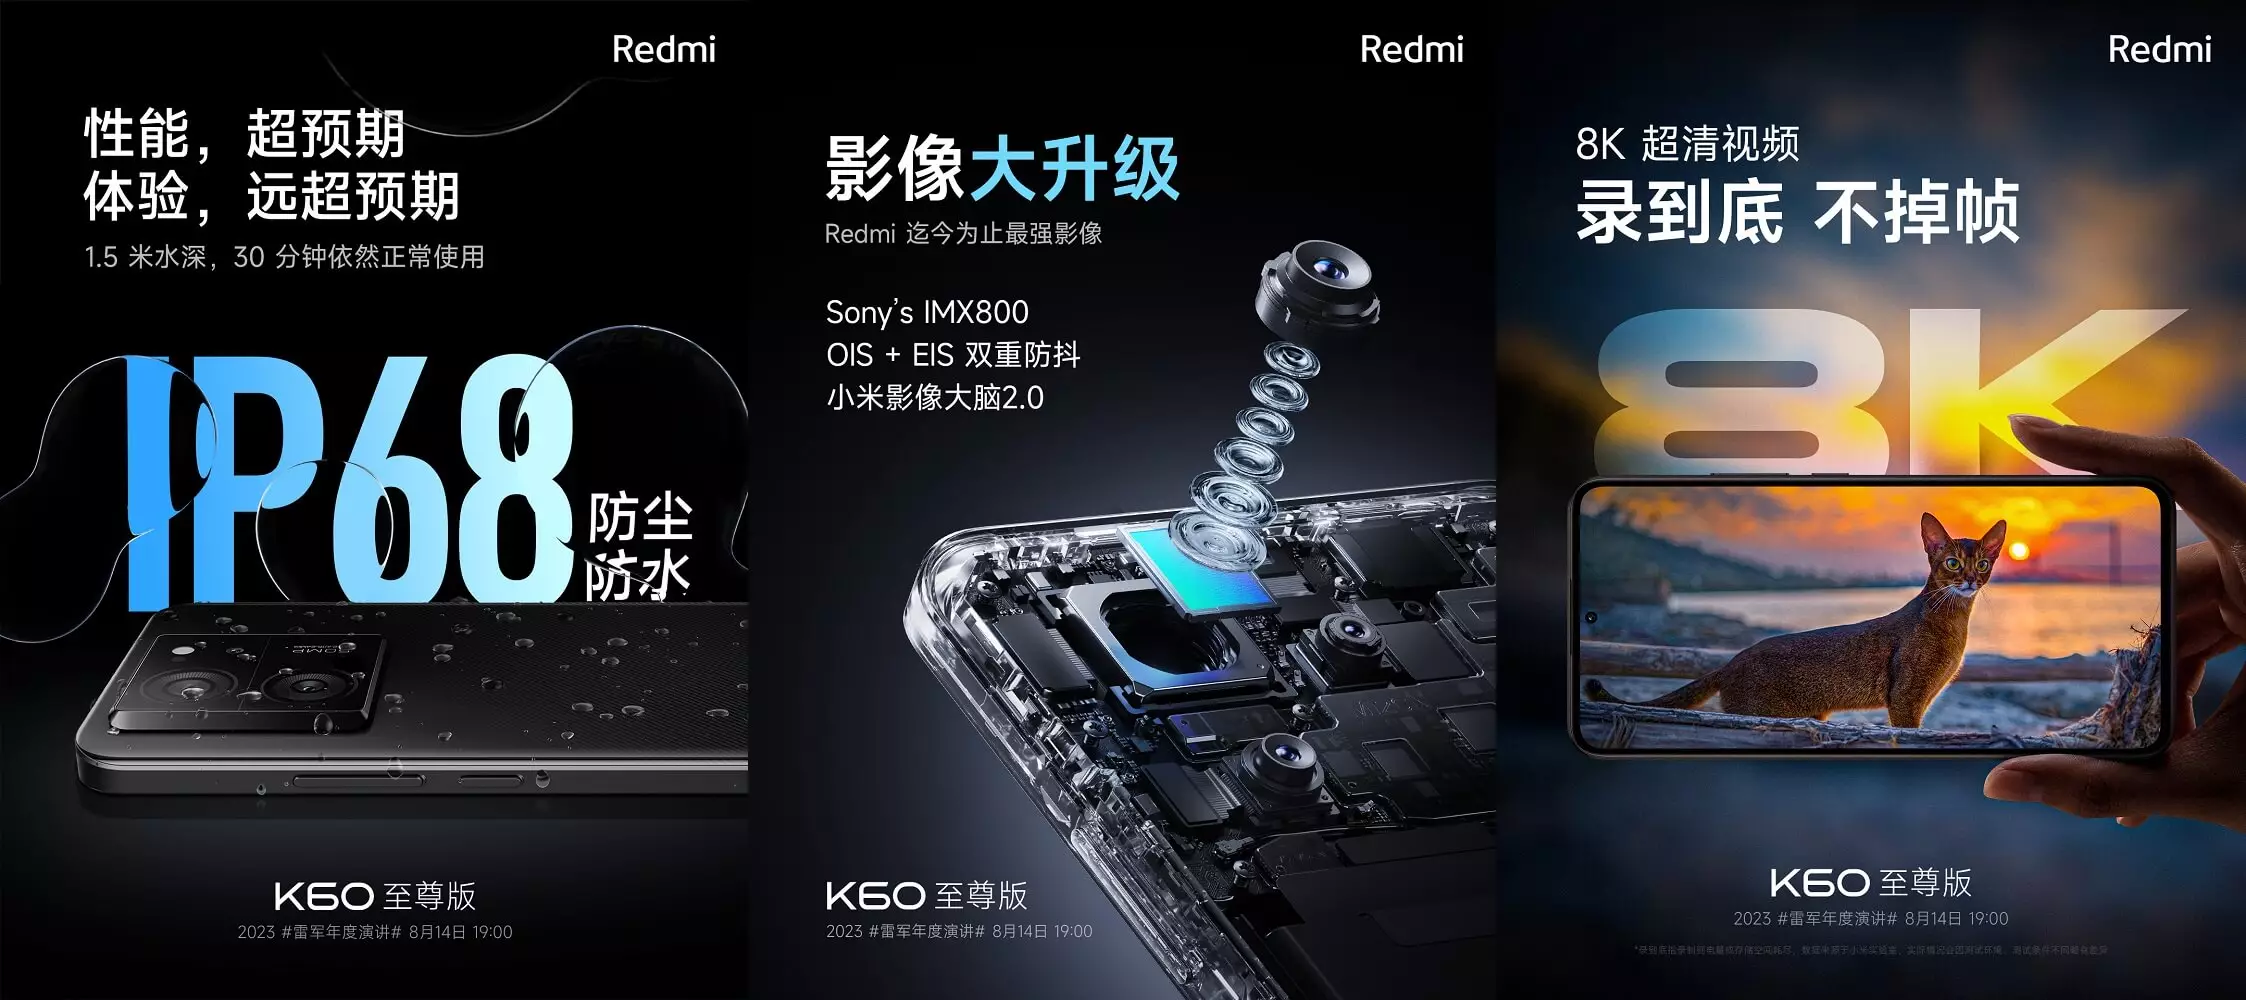 Redmi-K60-Ultra-features-1-cn.webp